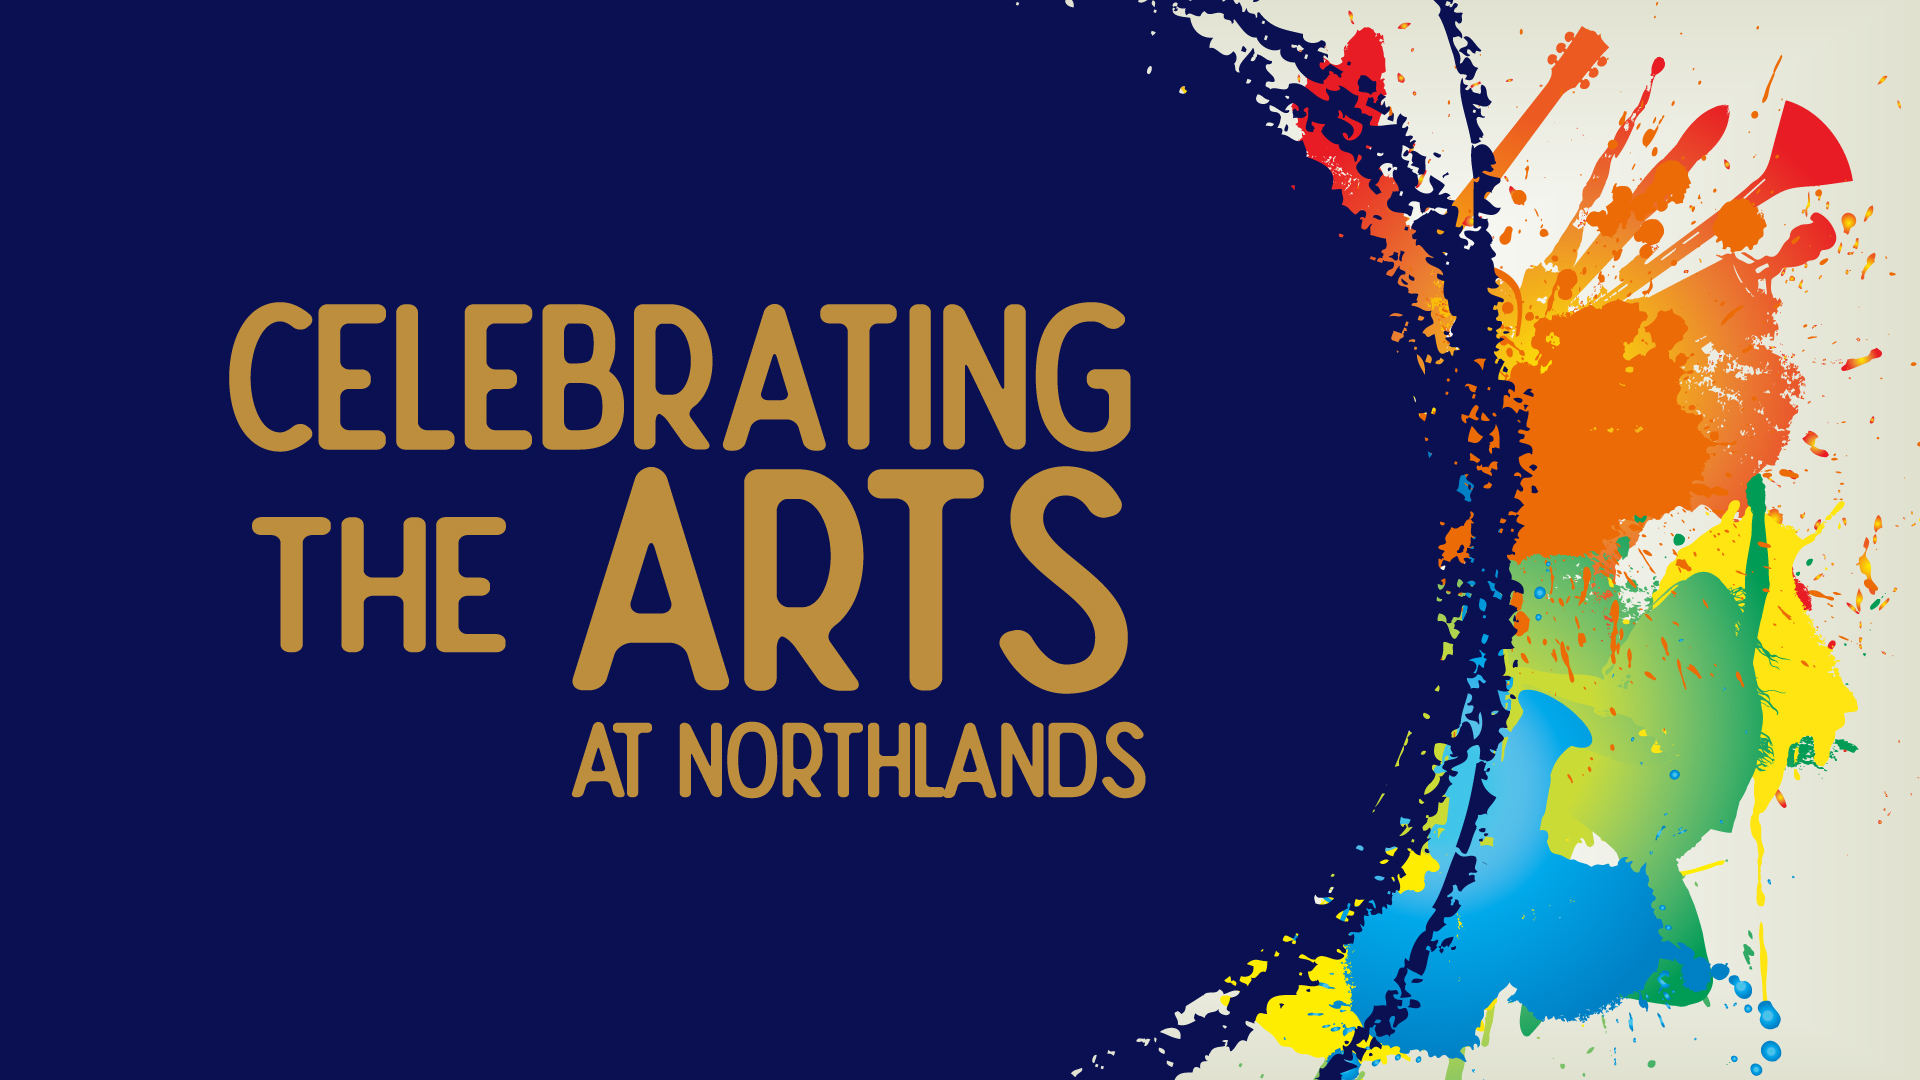 Celebrating the Arts at Northlands – Vernissage IB Art